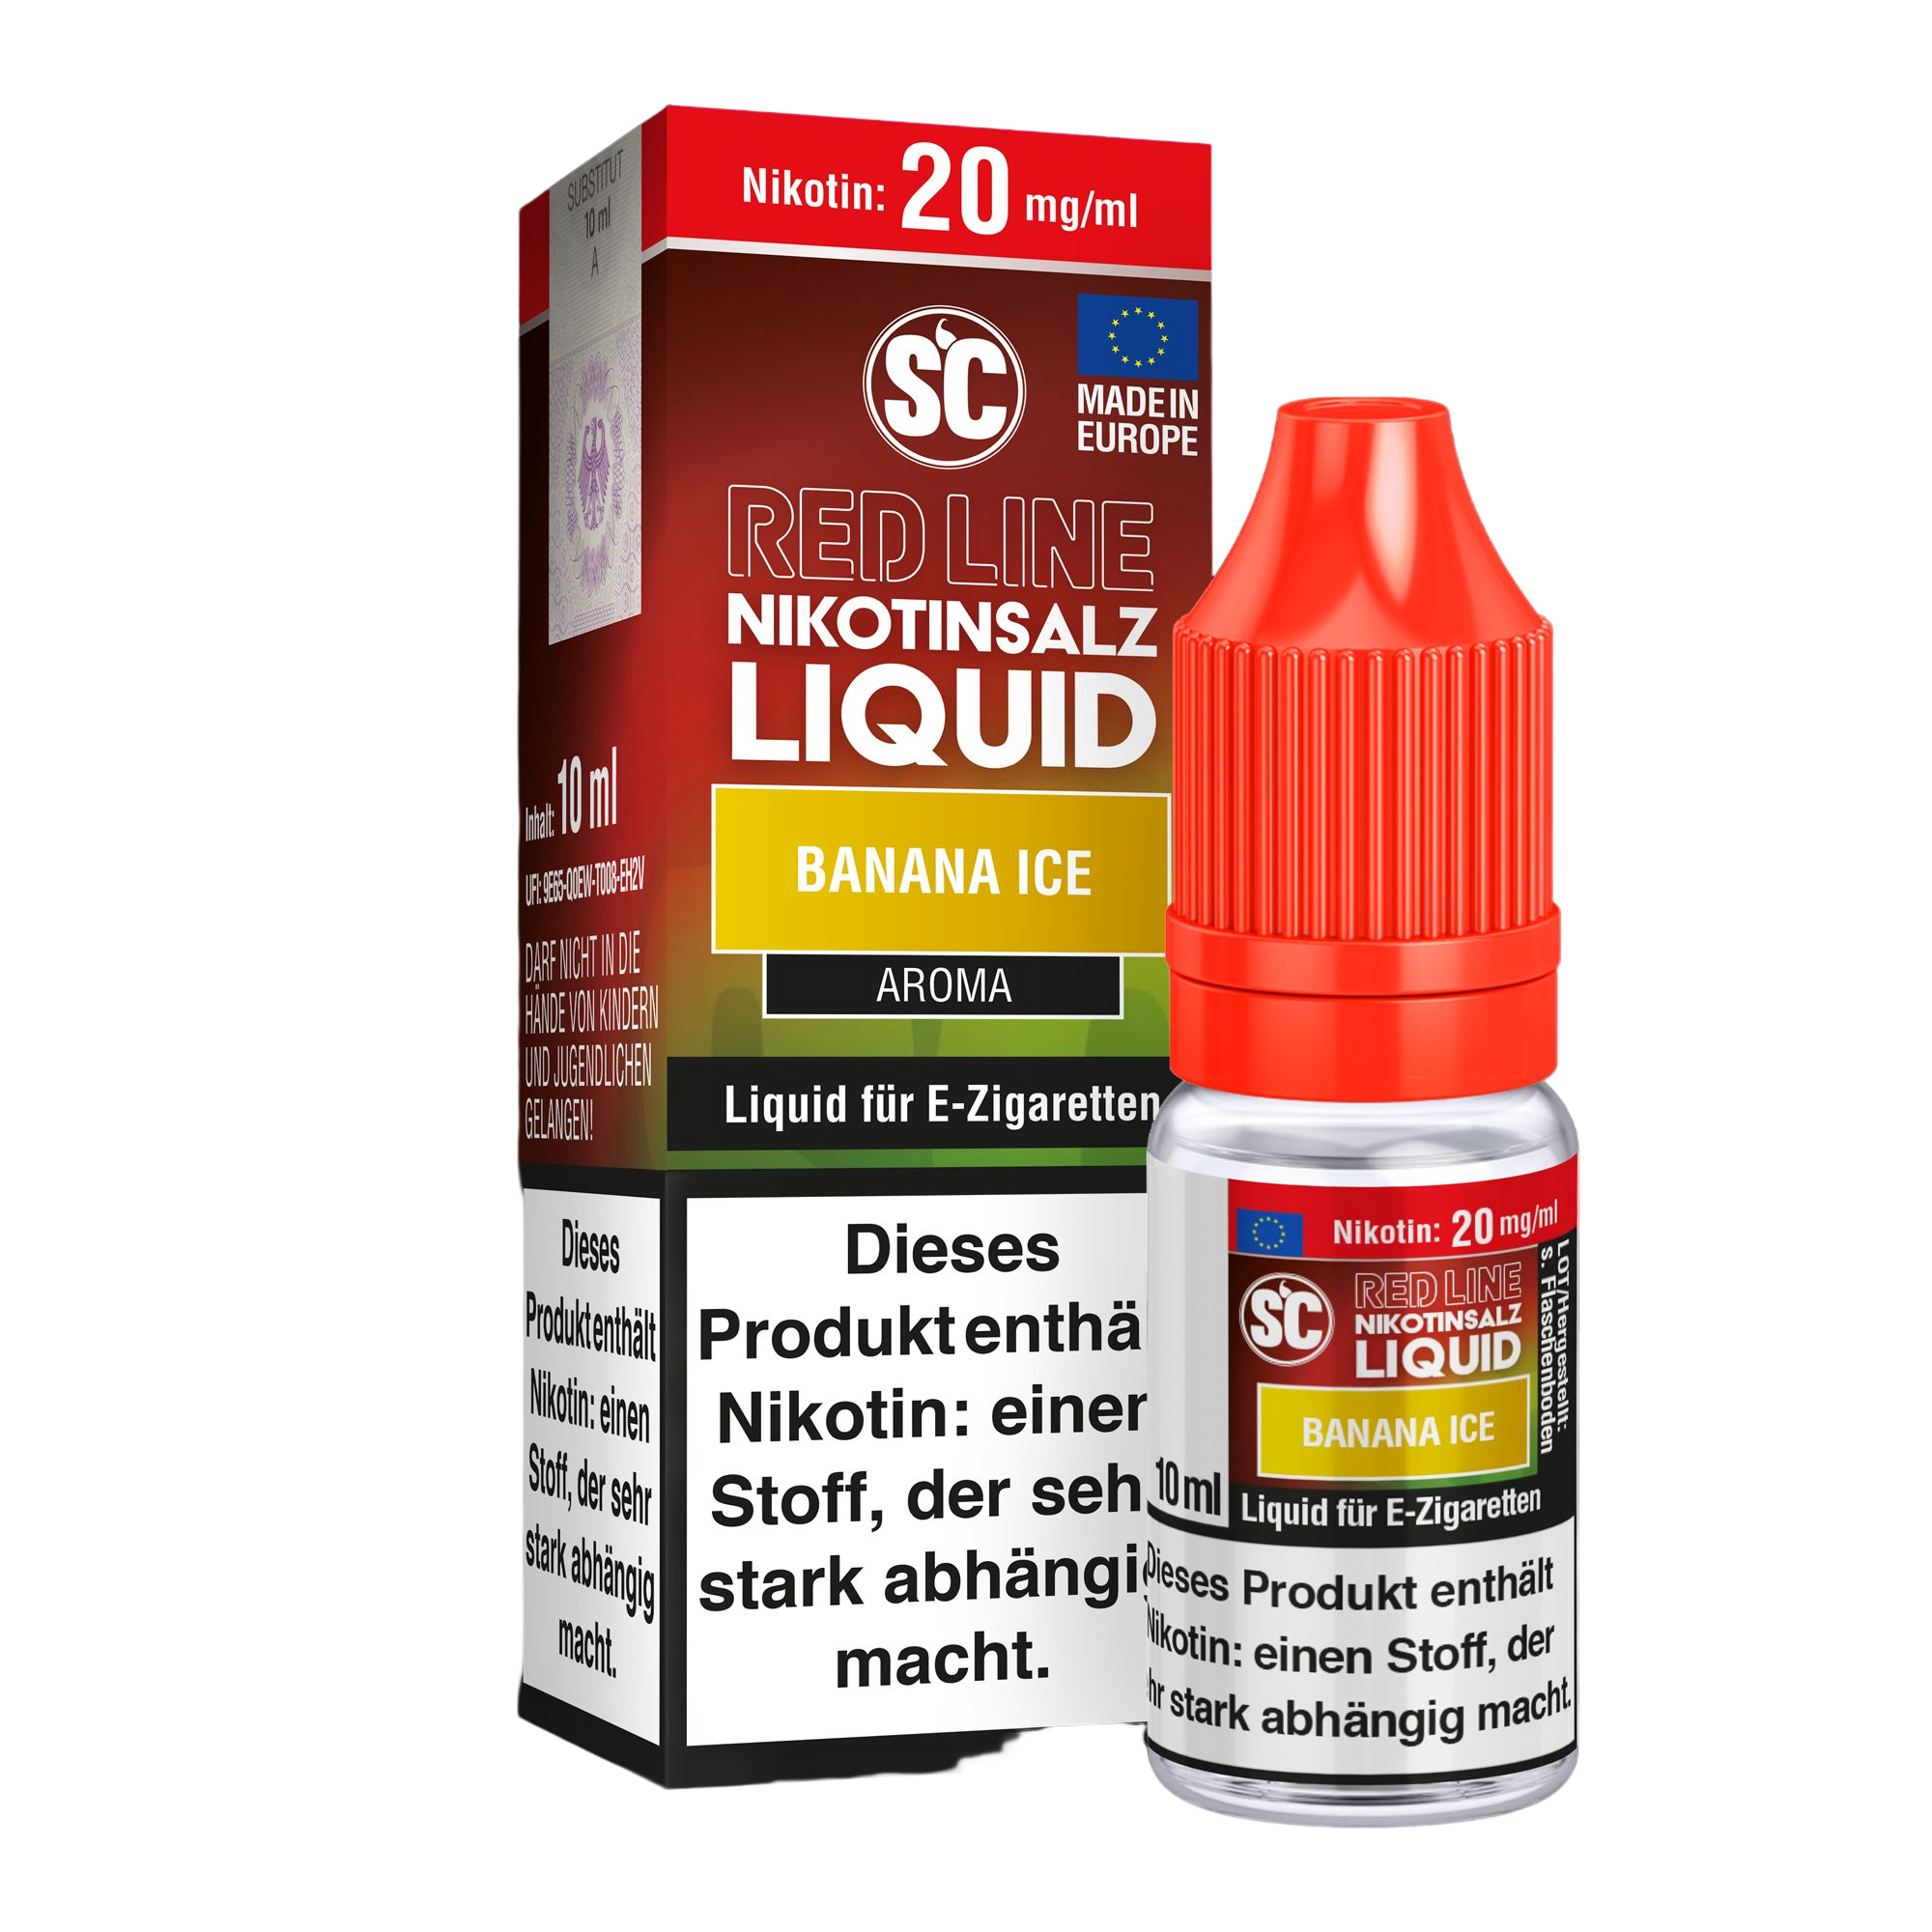 SC-RED LINE Banana Ice - Nikotinsalz Liquid 20 mg/ml